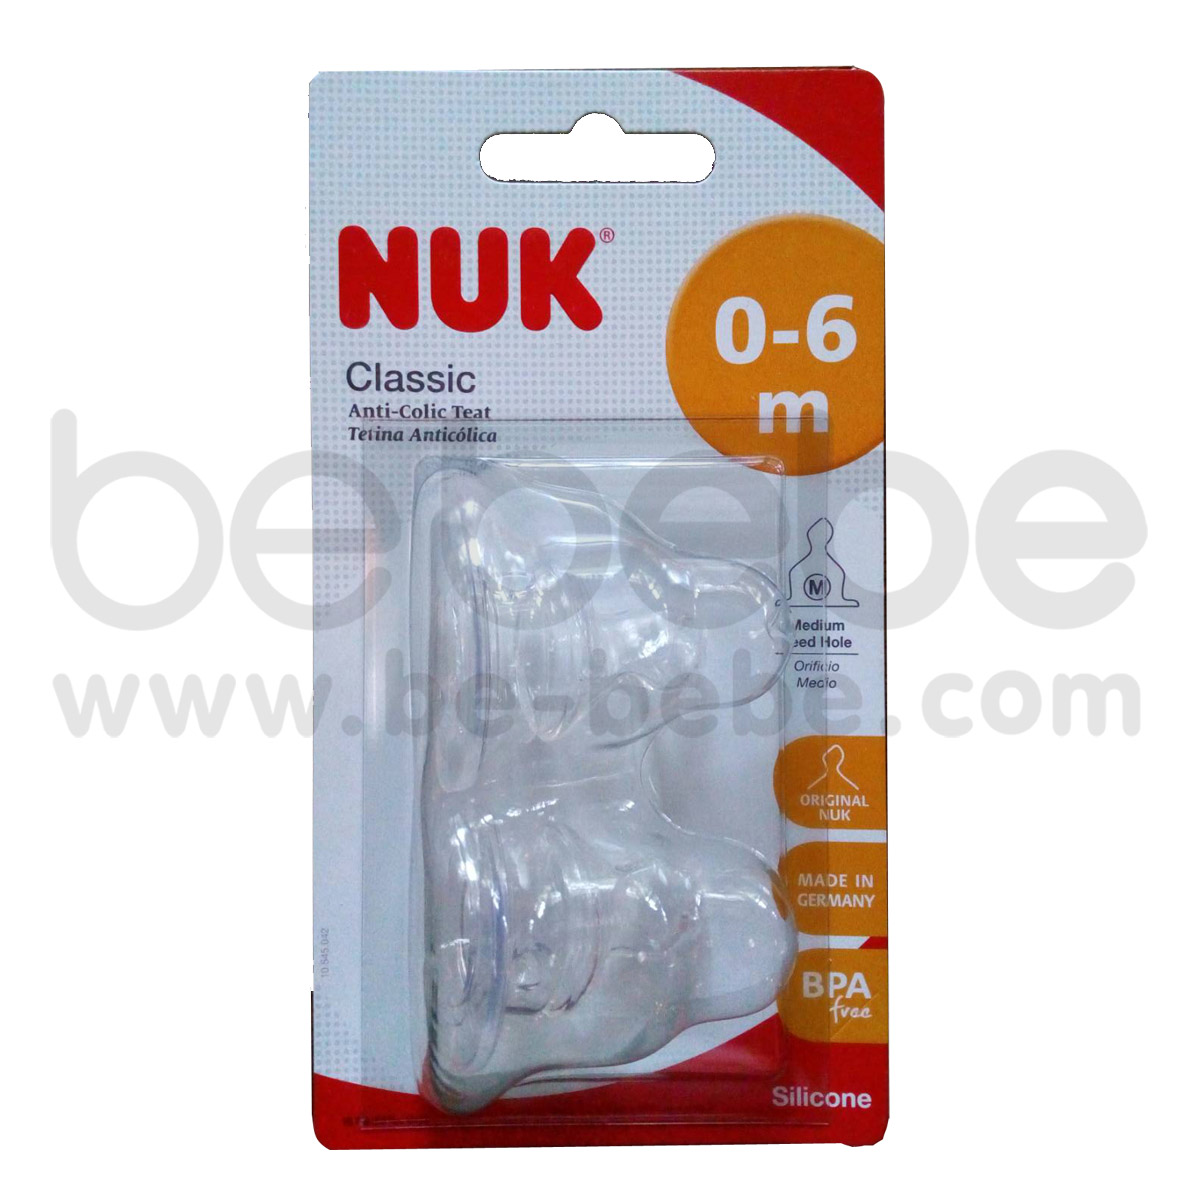 NUK:จุกนม Nuk Classic S1 (S) 0-6 m. 